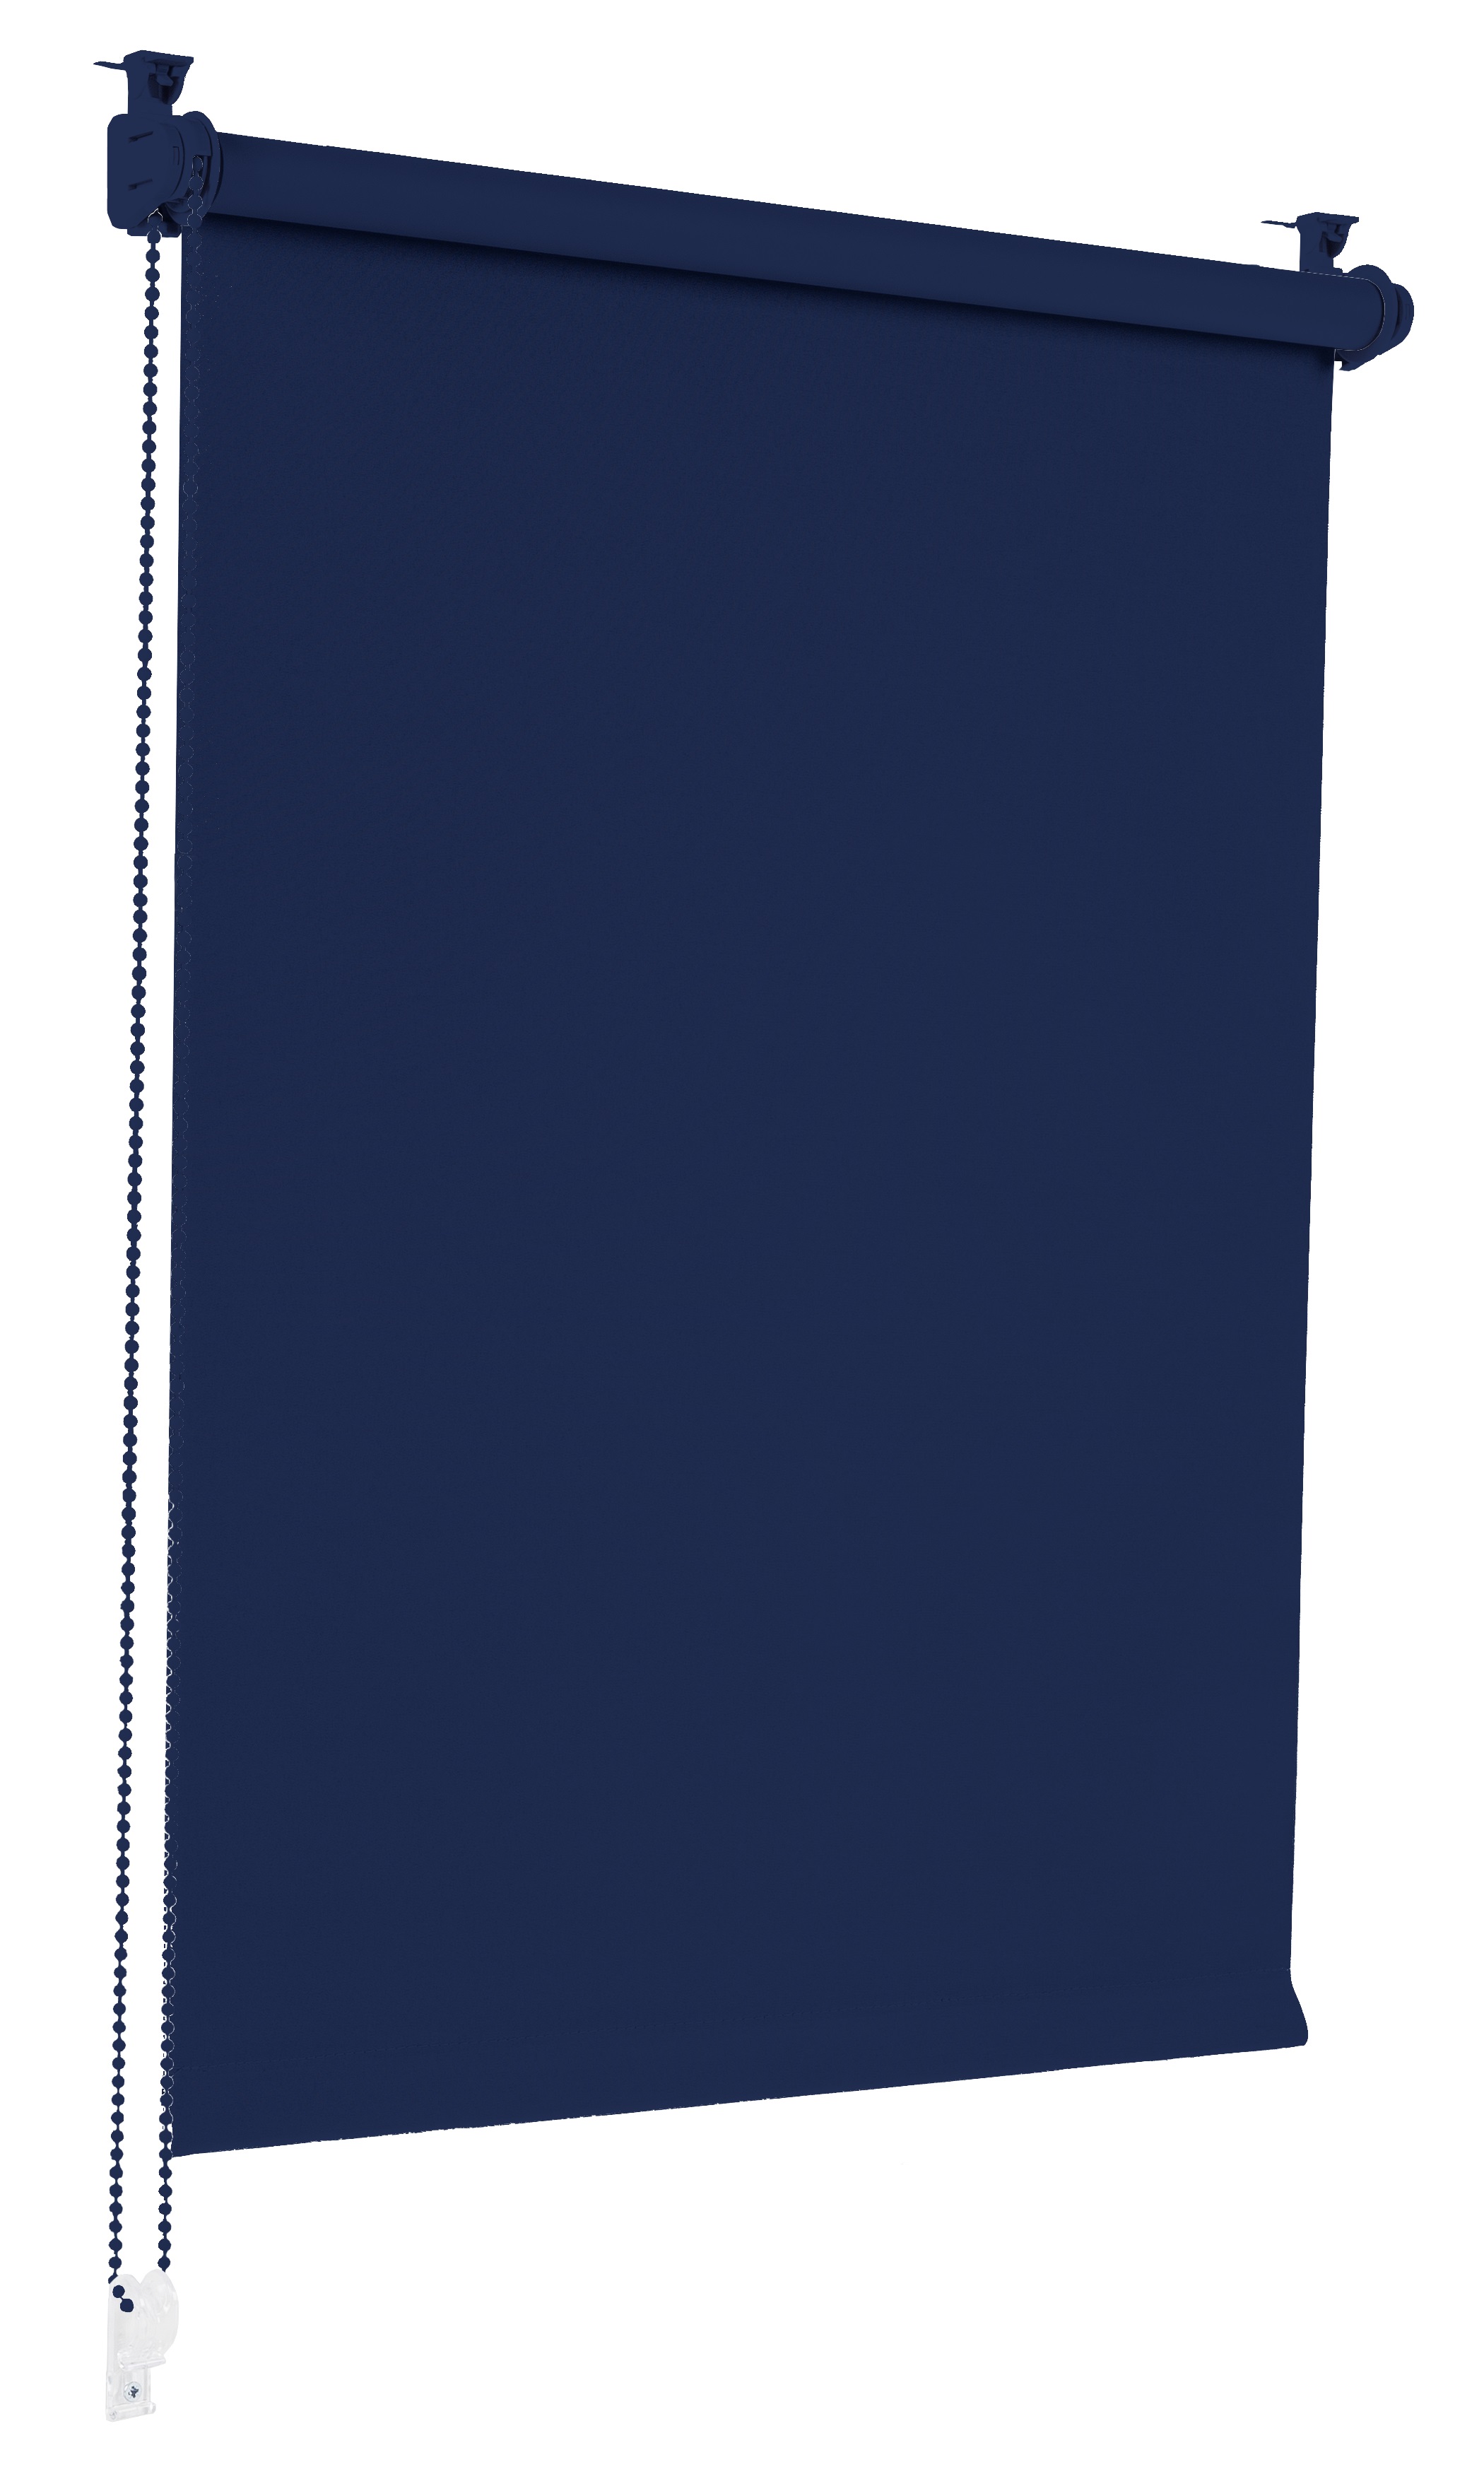 SONELLO Verdunkelungsrollo dunkelblau 55cm x 210cm